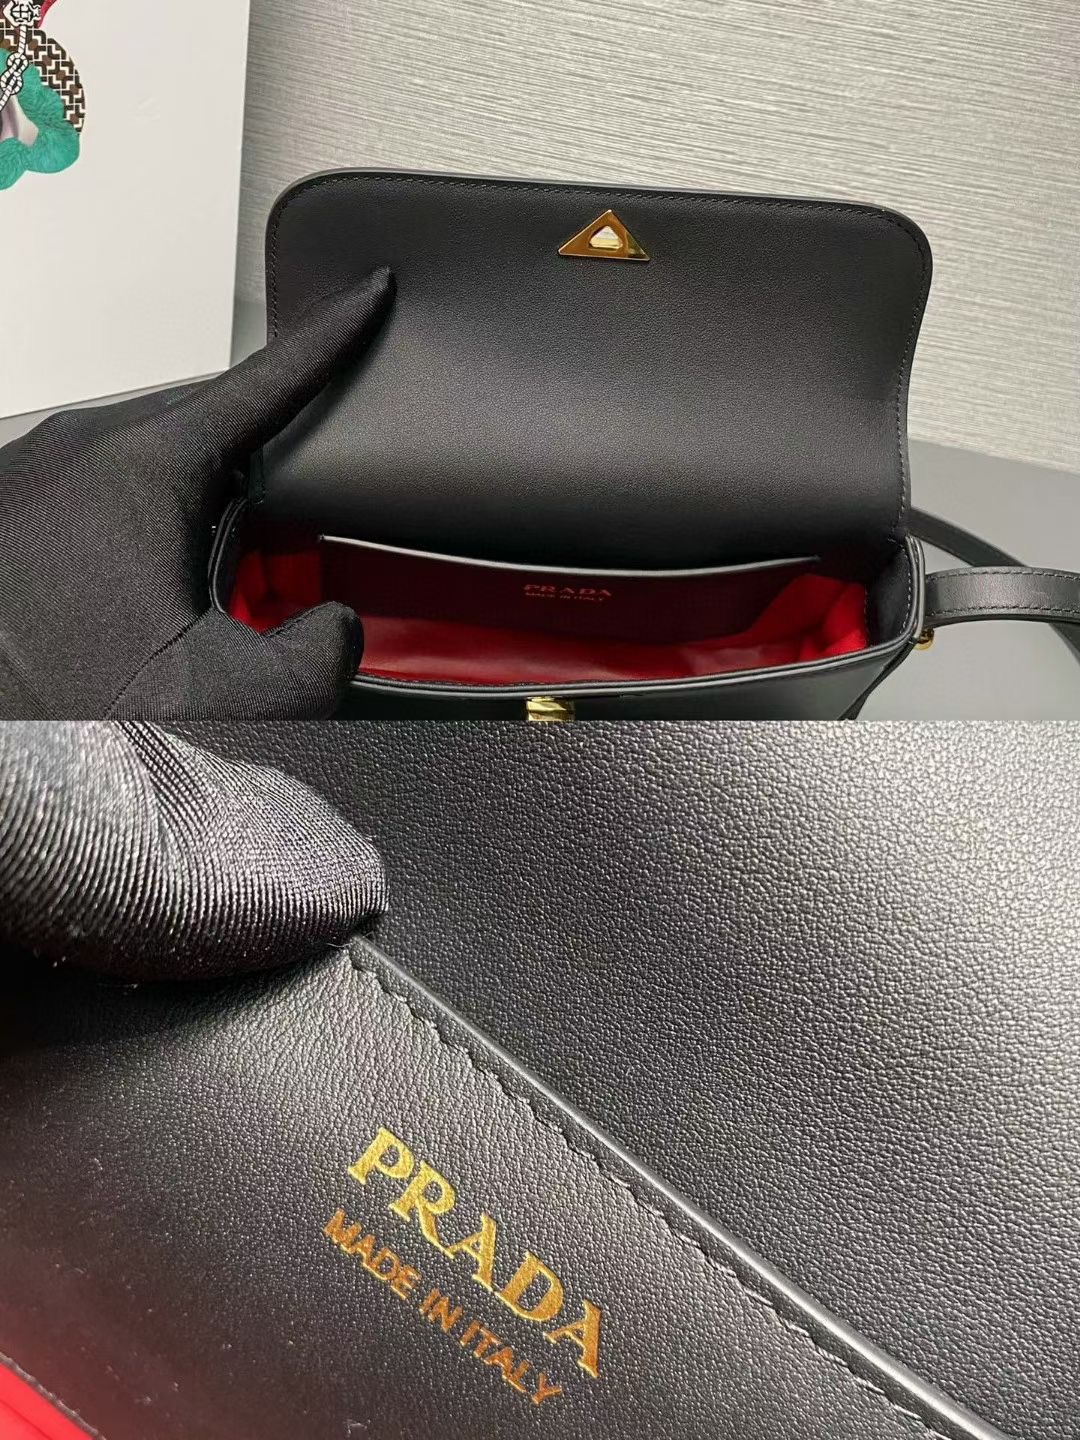 Prada Patent leather shoulder bag with flap 1BD339 black